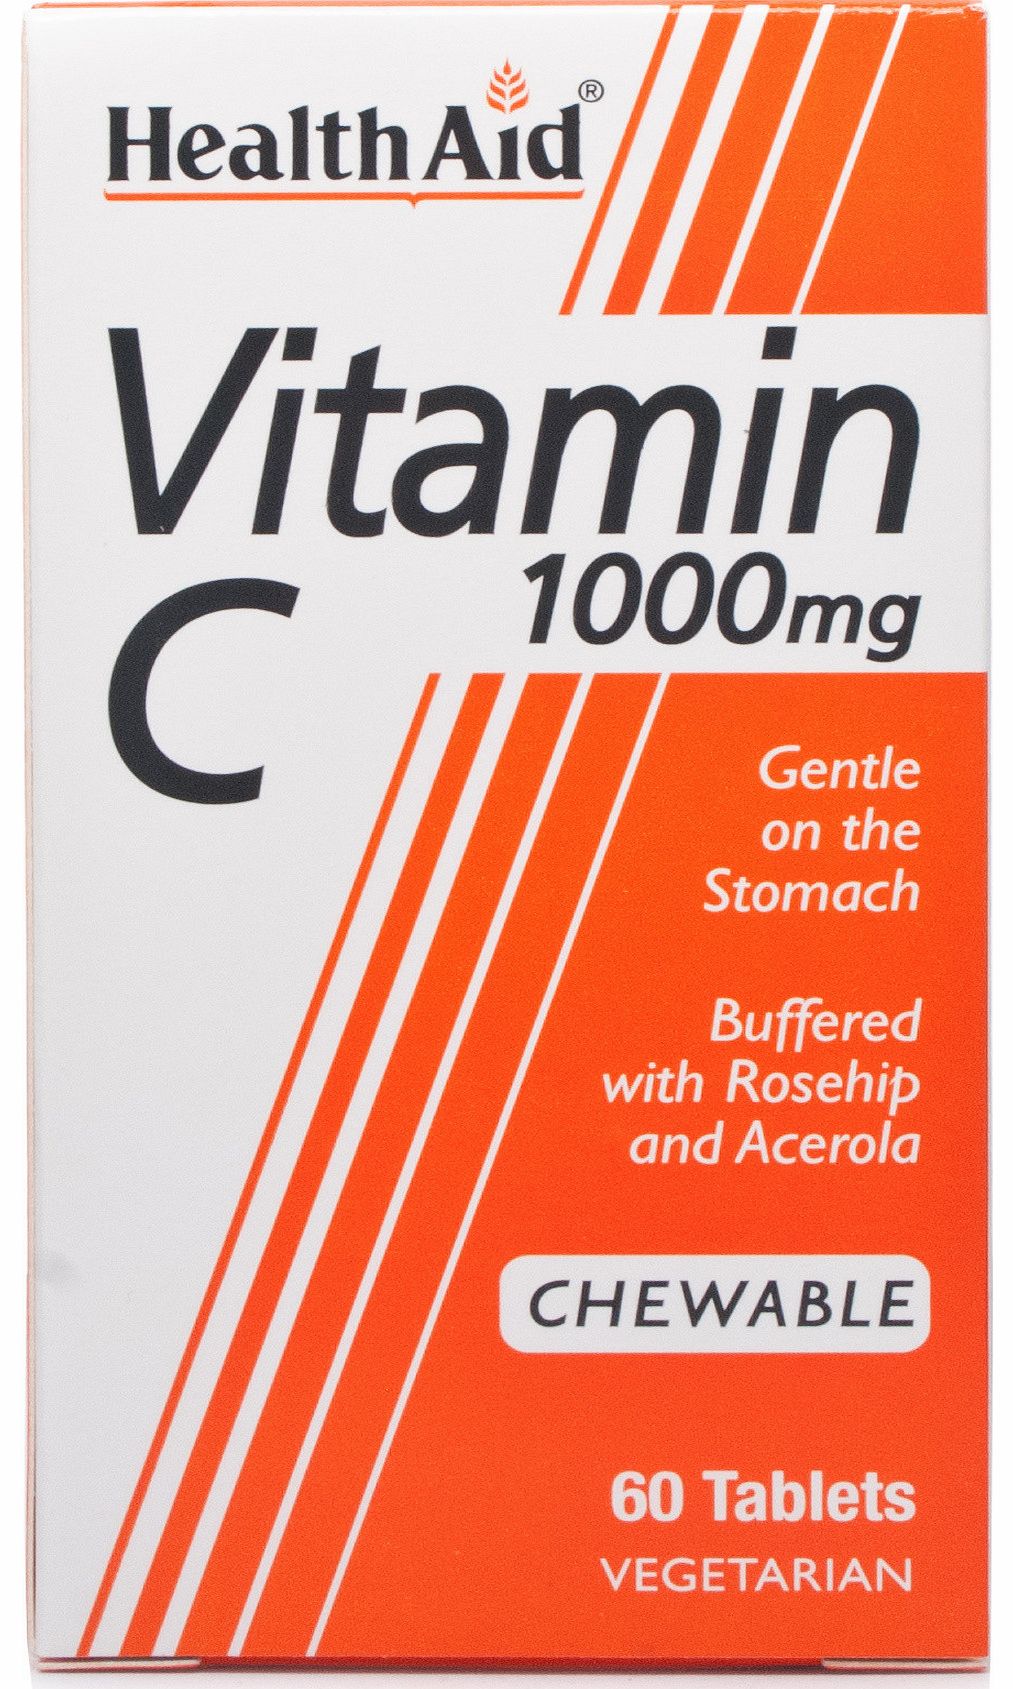 Health Aid HealthAid Vitamin C 1000mg Tablets Chewable